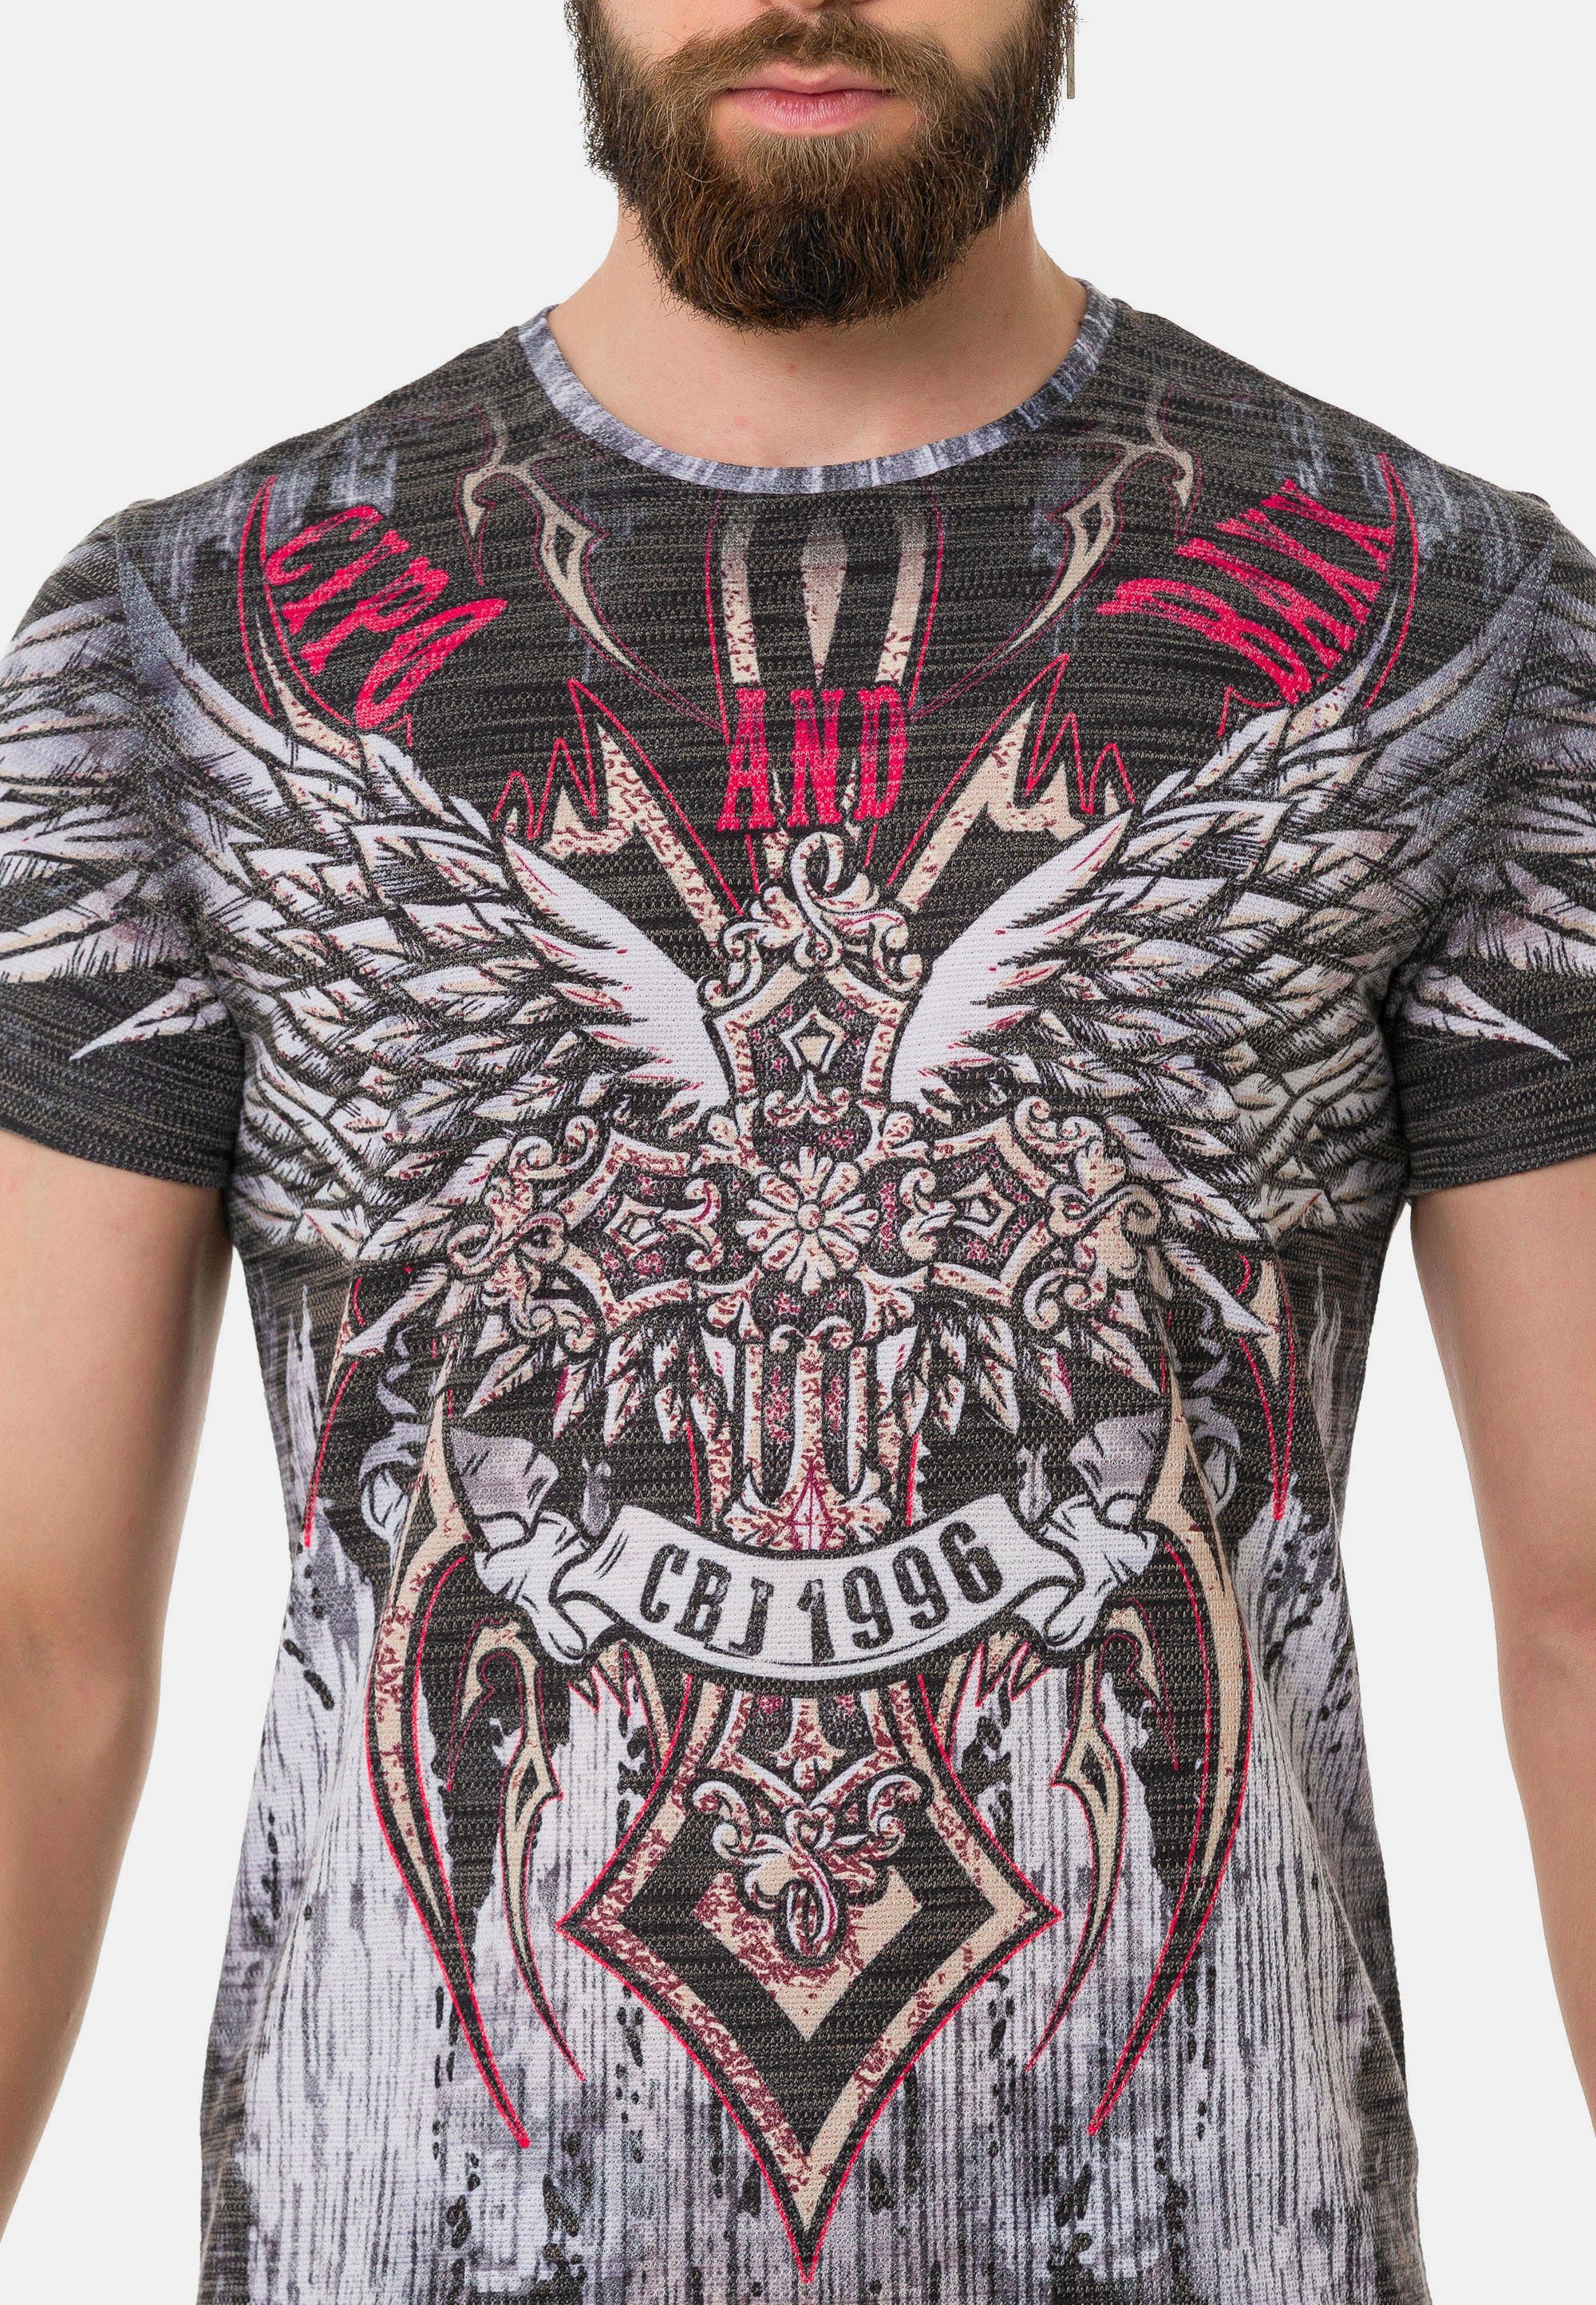 T-Shirt Baxx Full-Print-Design im & Cipo trendigen